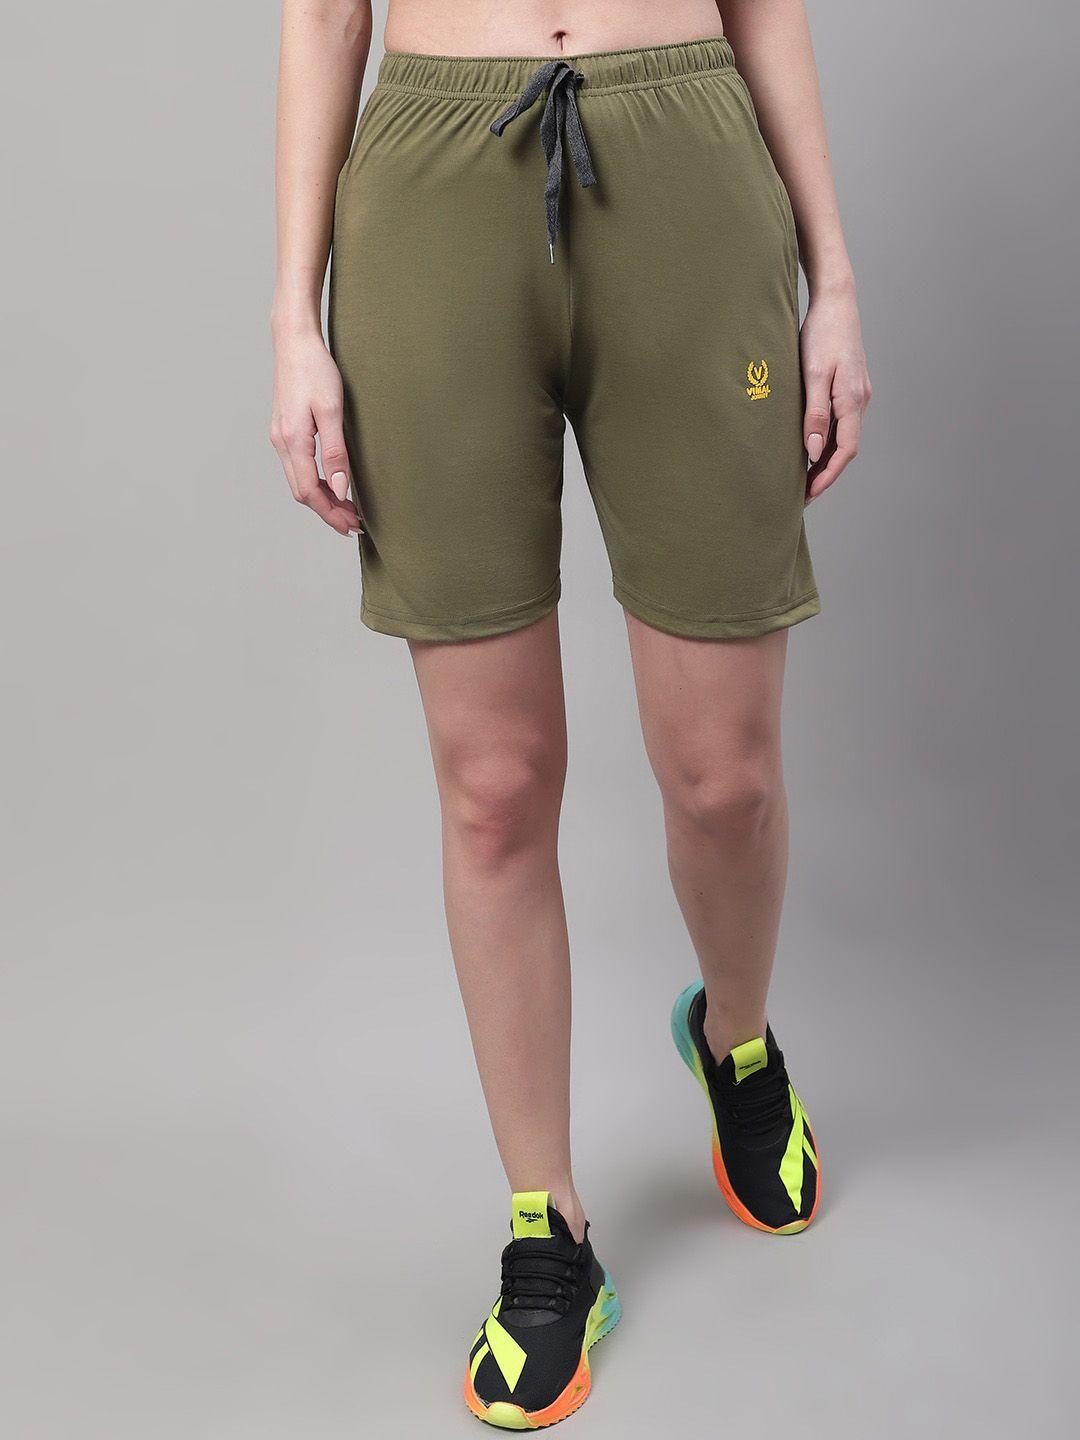 vimal-jonney-women-mid-rise-above-knee-sports-shorts